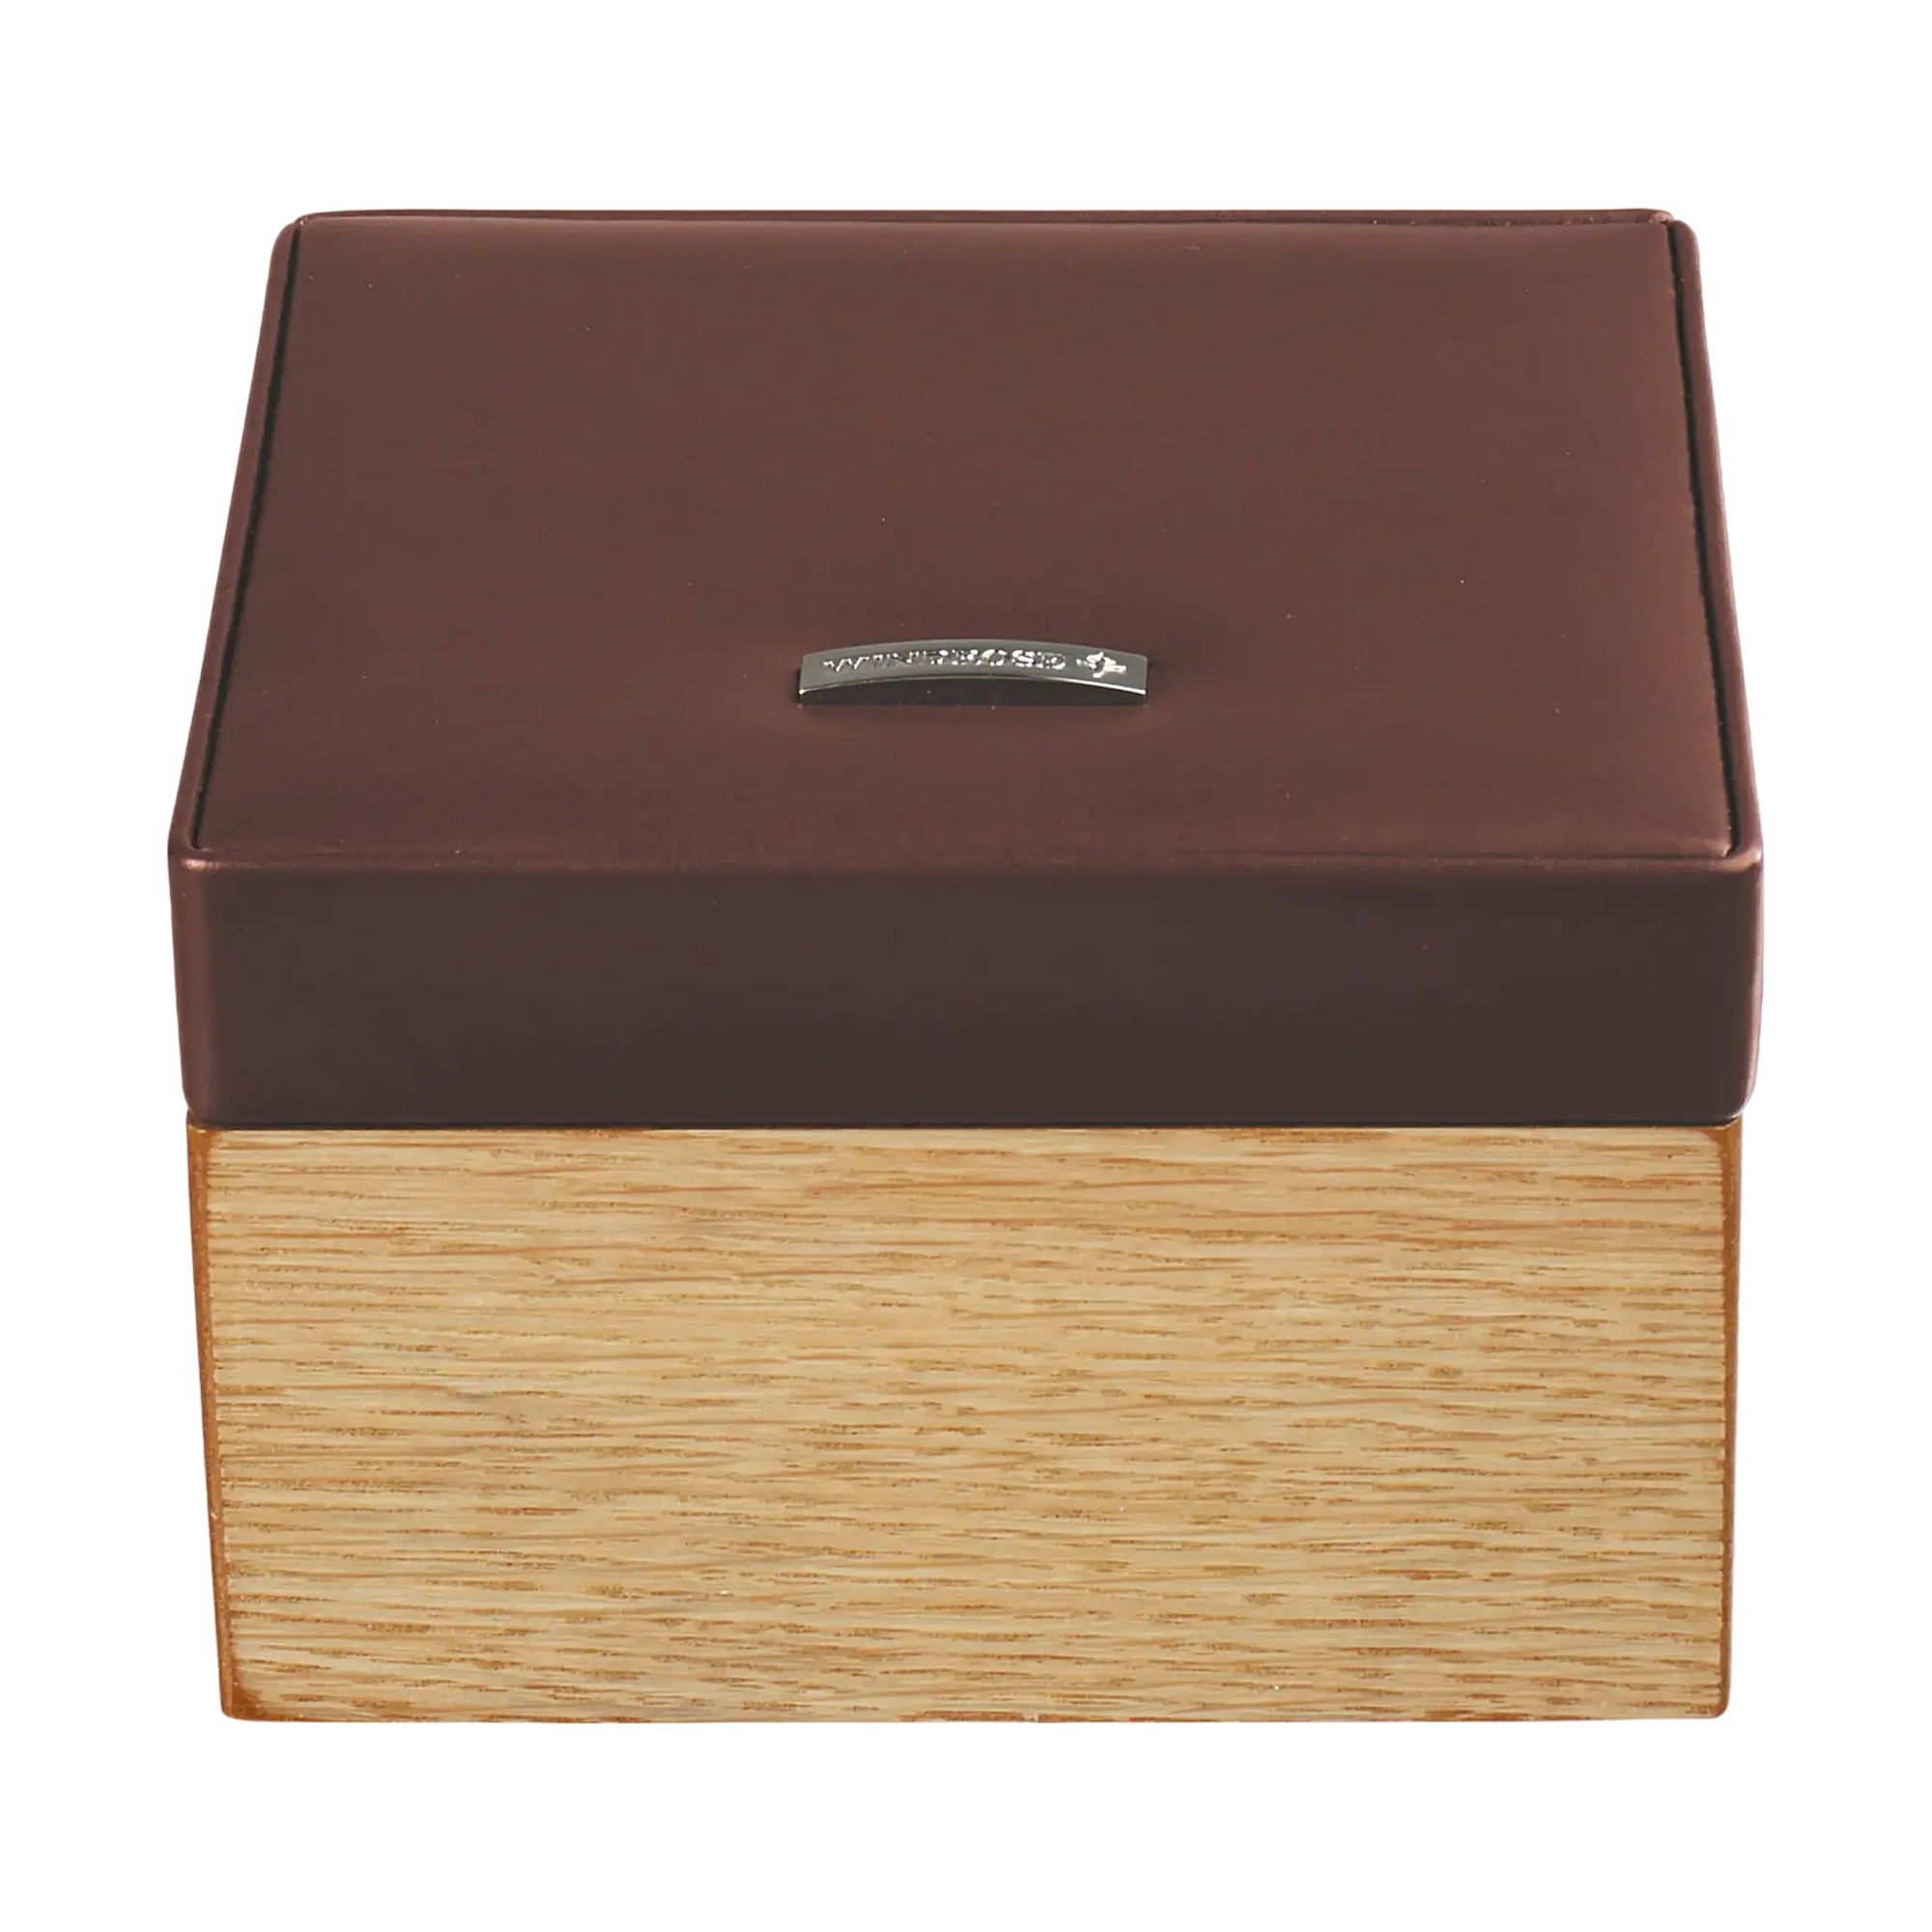 Jewelry box wood / brown